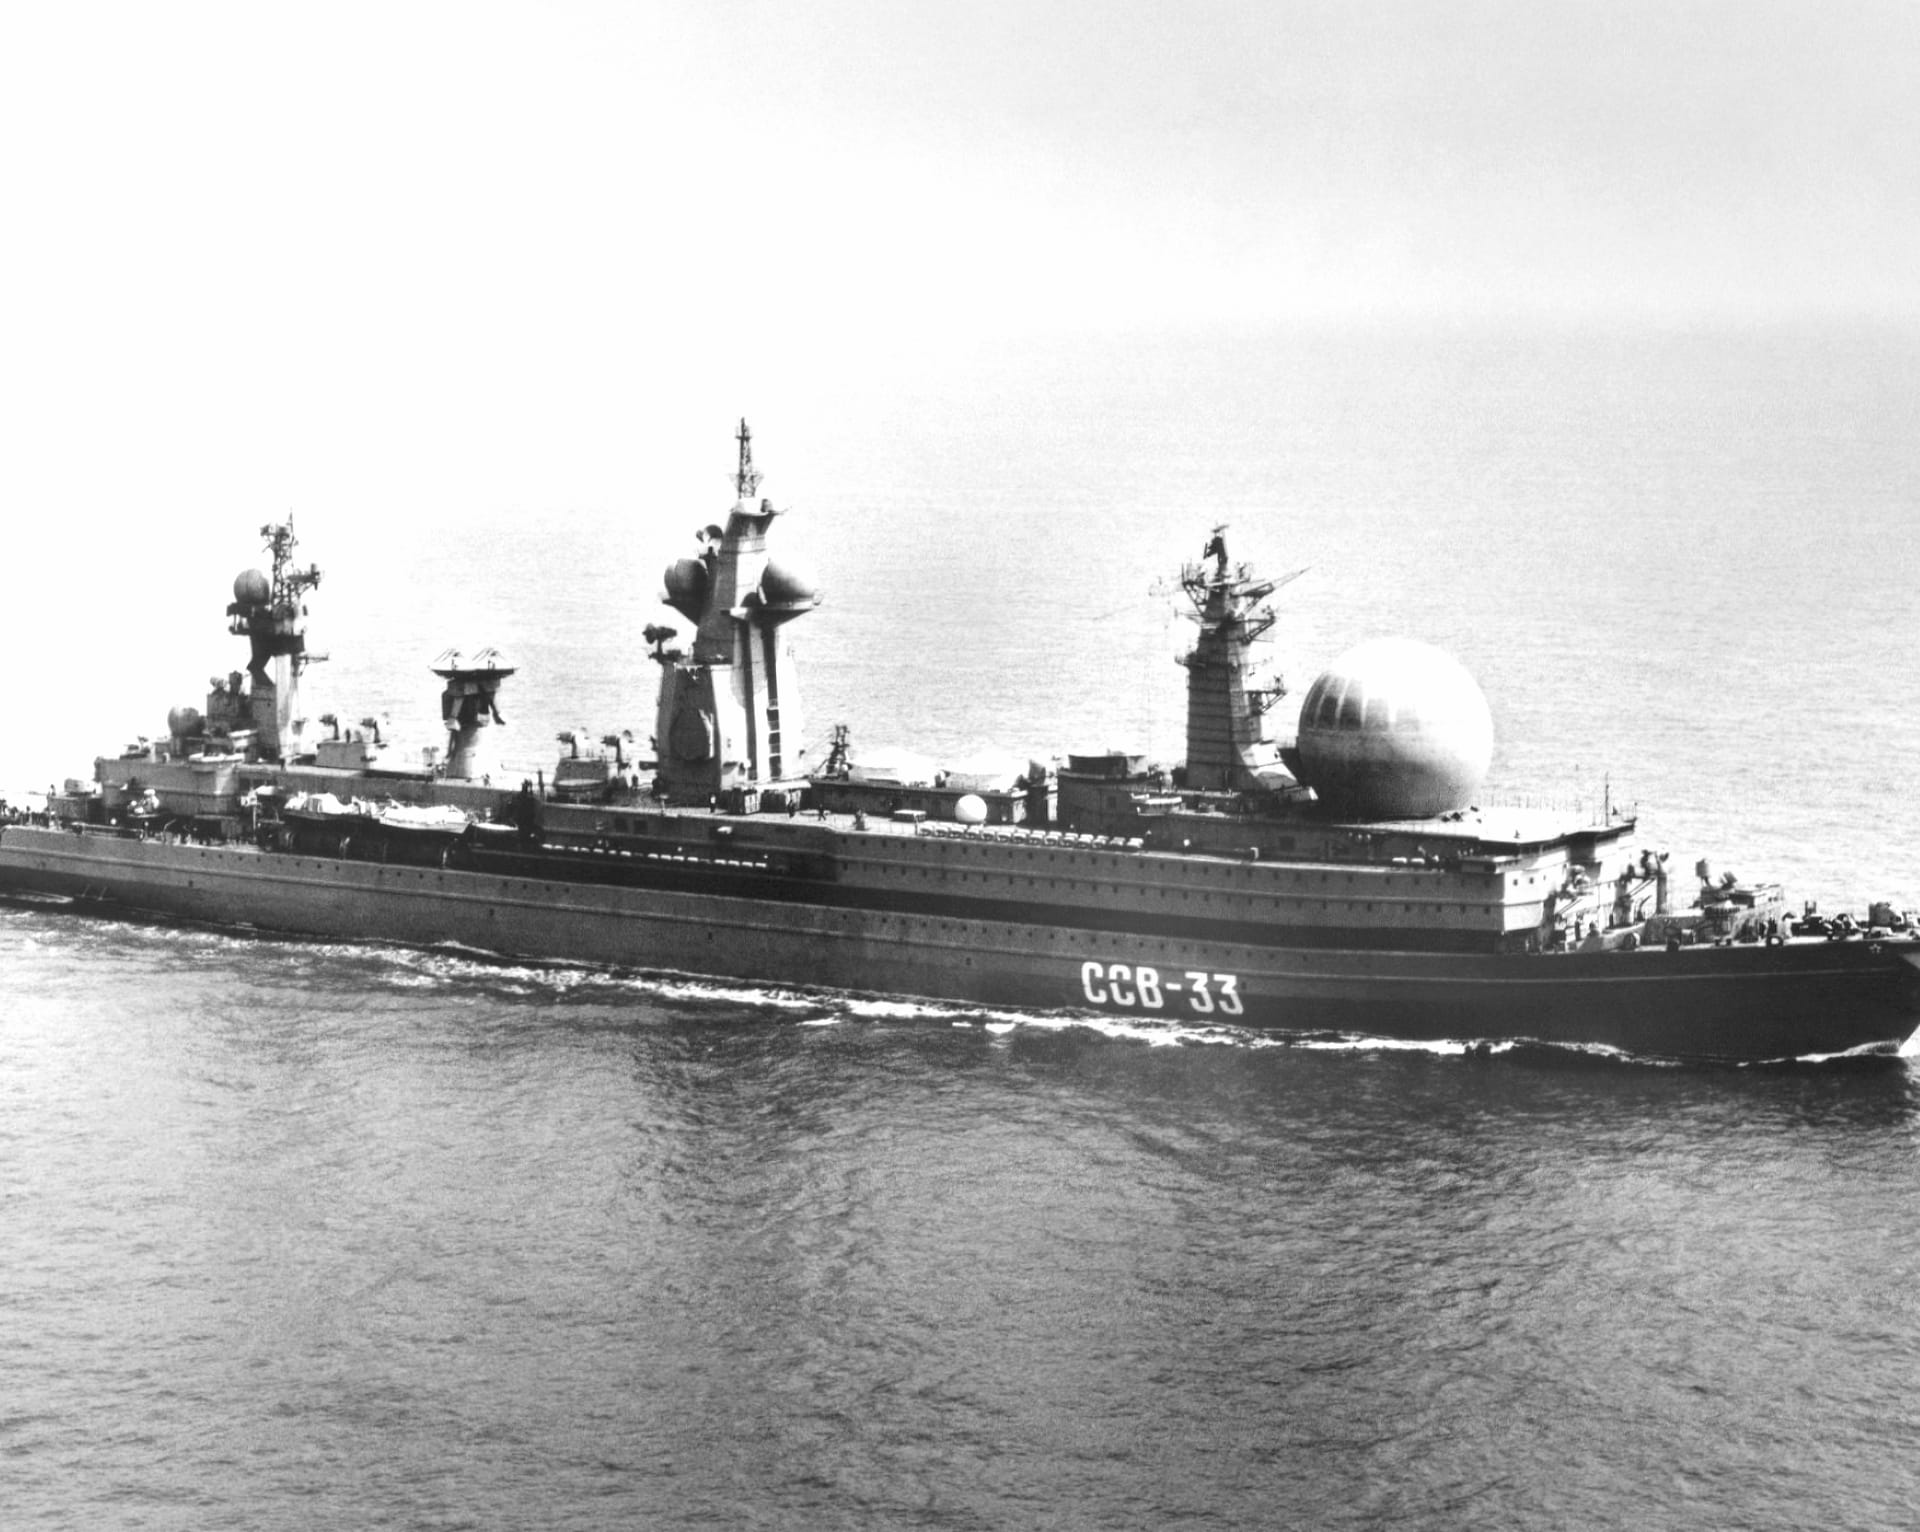 Soviet communications ship SSV-33 wallpapers HD quality